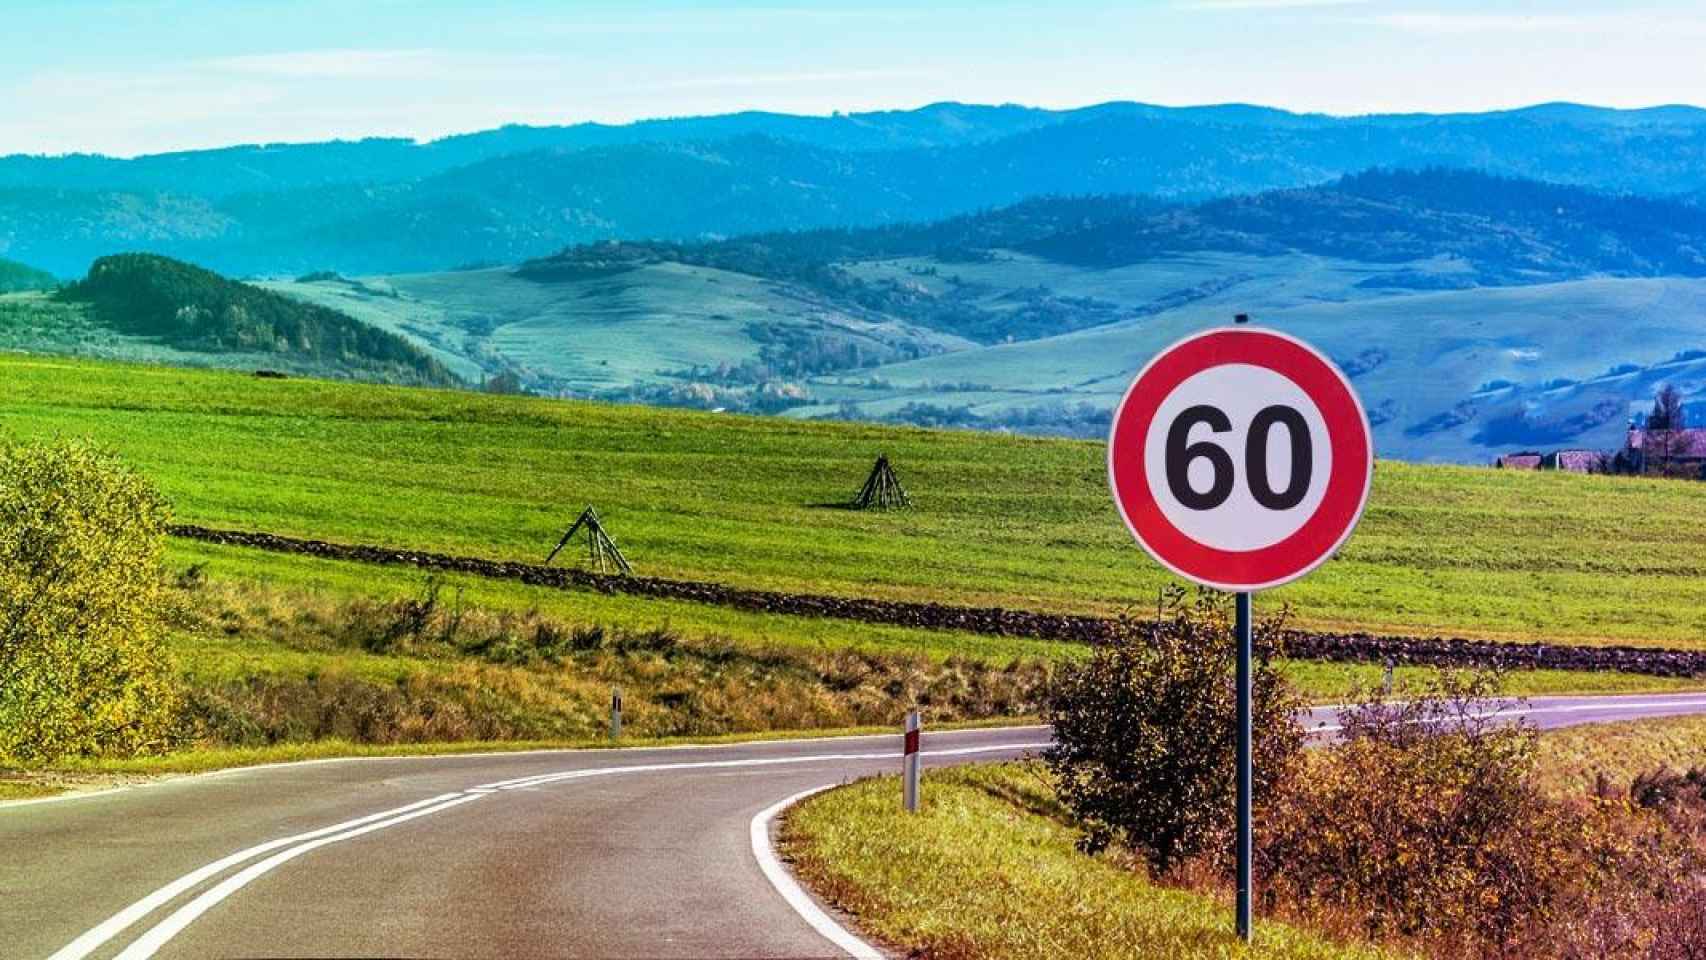 Señal de tráfico circular de prohibición de velocidad máxima a 60 / AGENCIAS